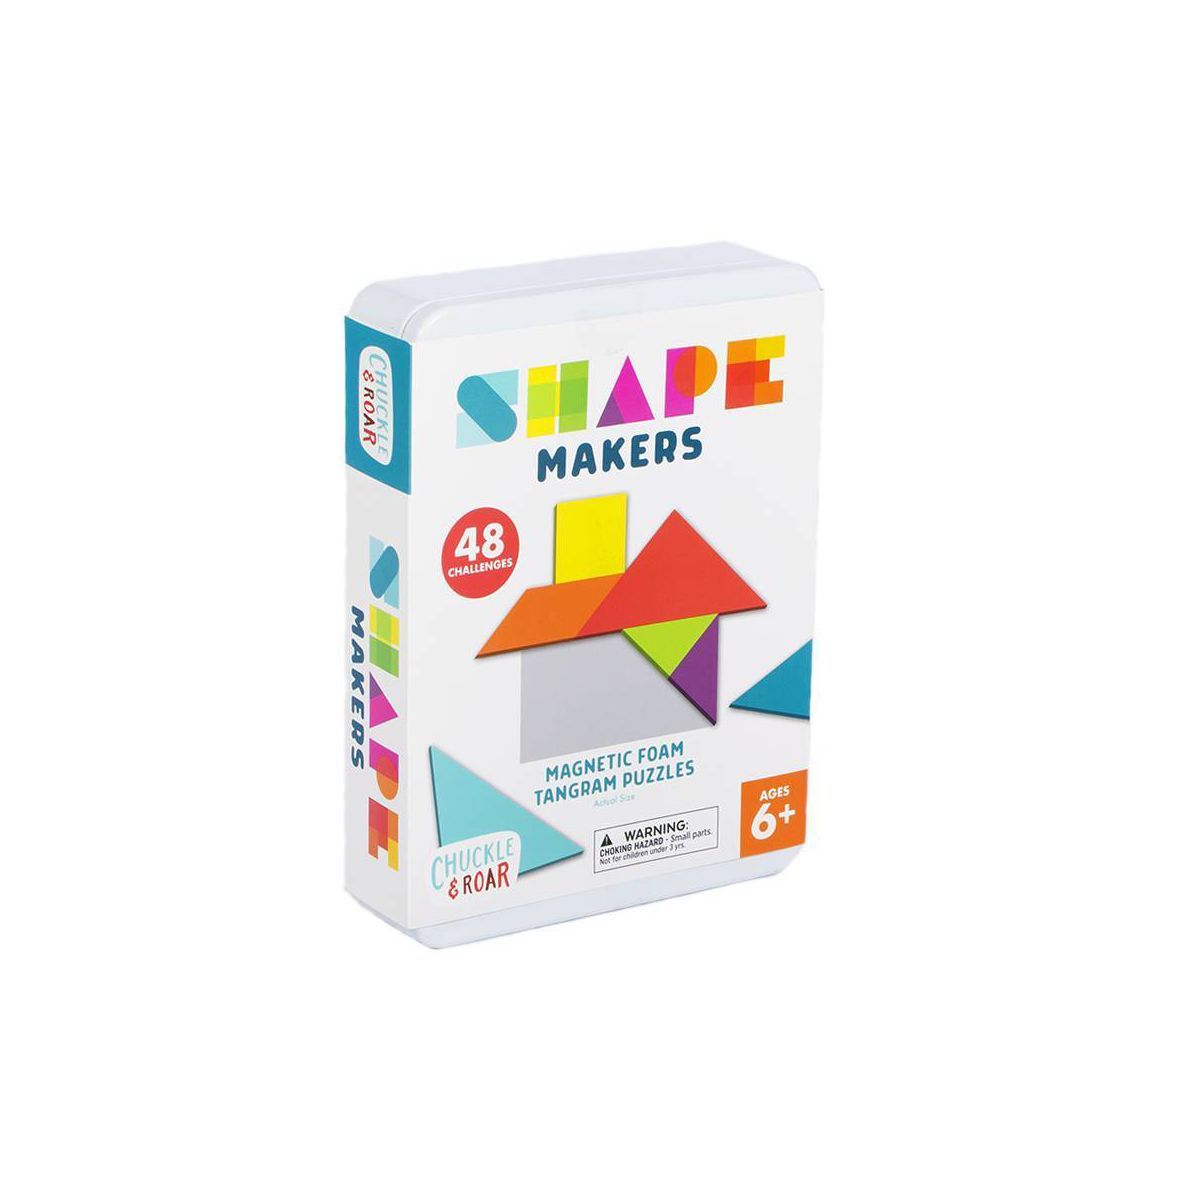 Chuckle & Roar Shape Makers Magnetic Foam Tangrams Game | Target